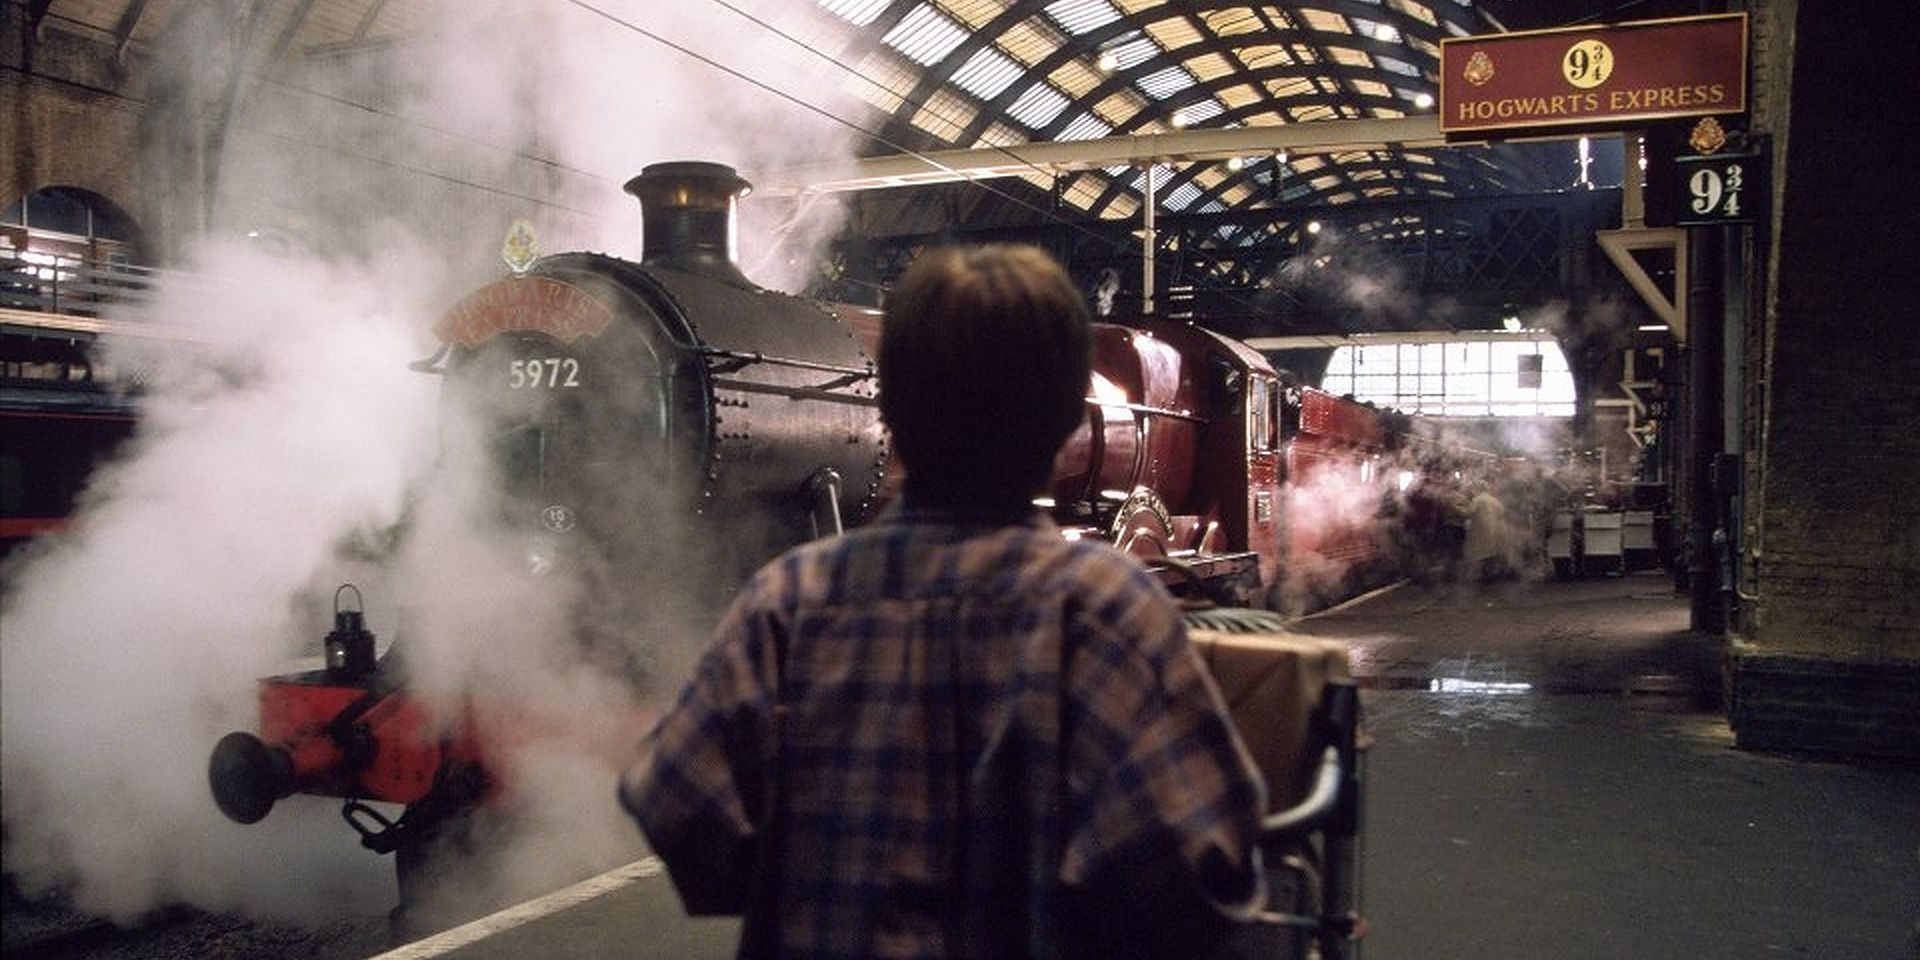 Harry Potter Harry arrives to the platform 9 3/4